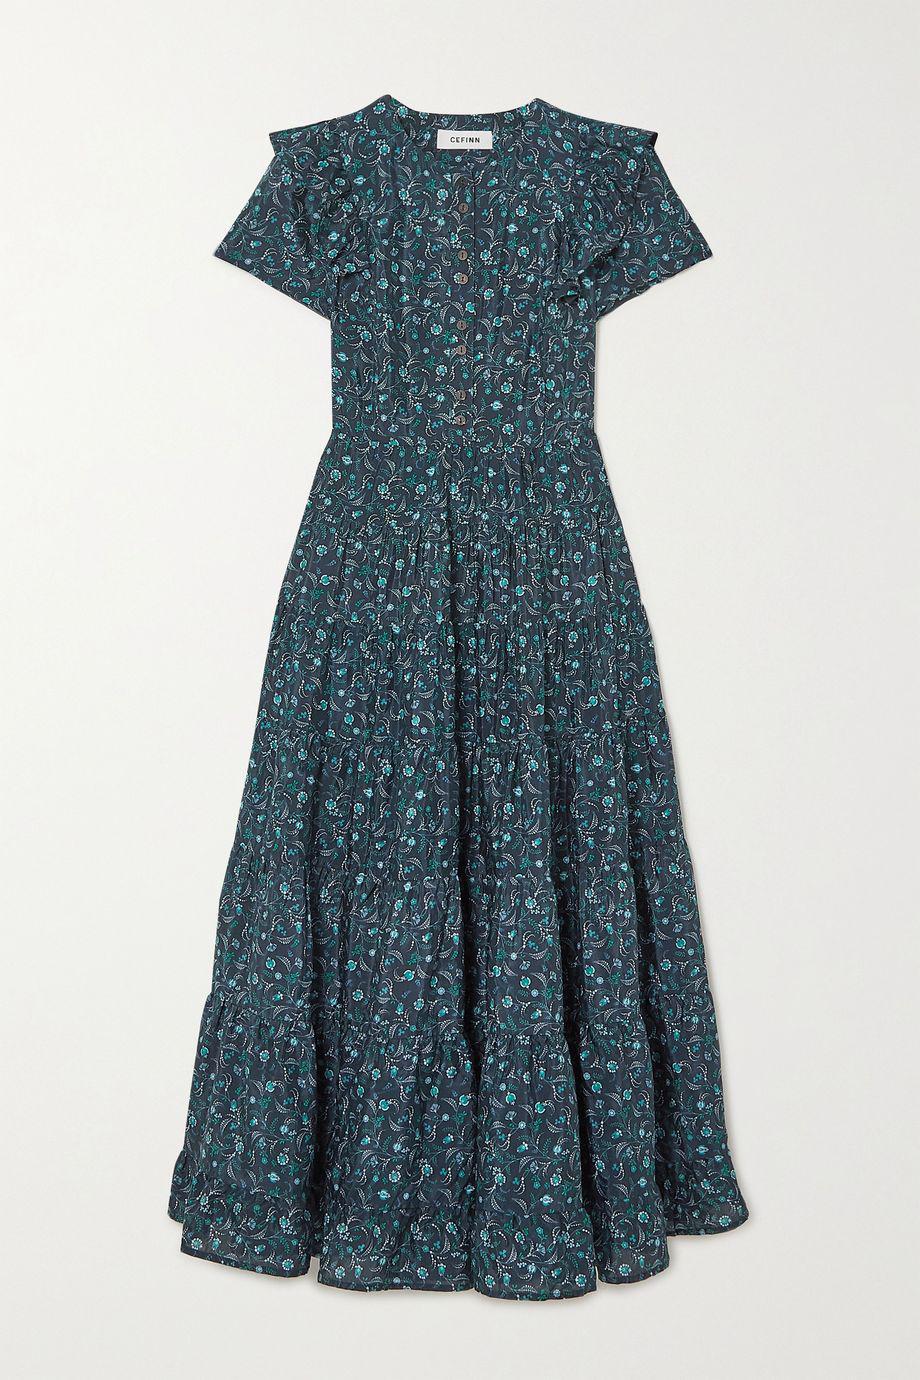 Sawyer ruffled floral-print cotton-blend maxi dress by CEFINN